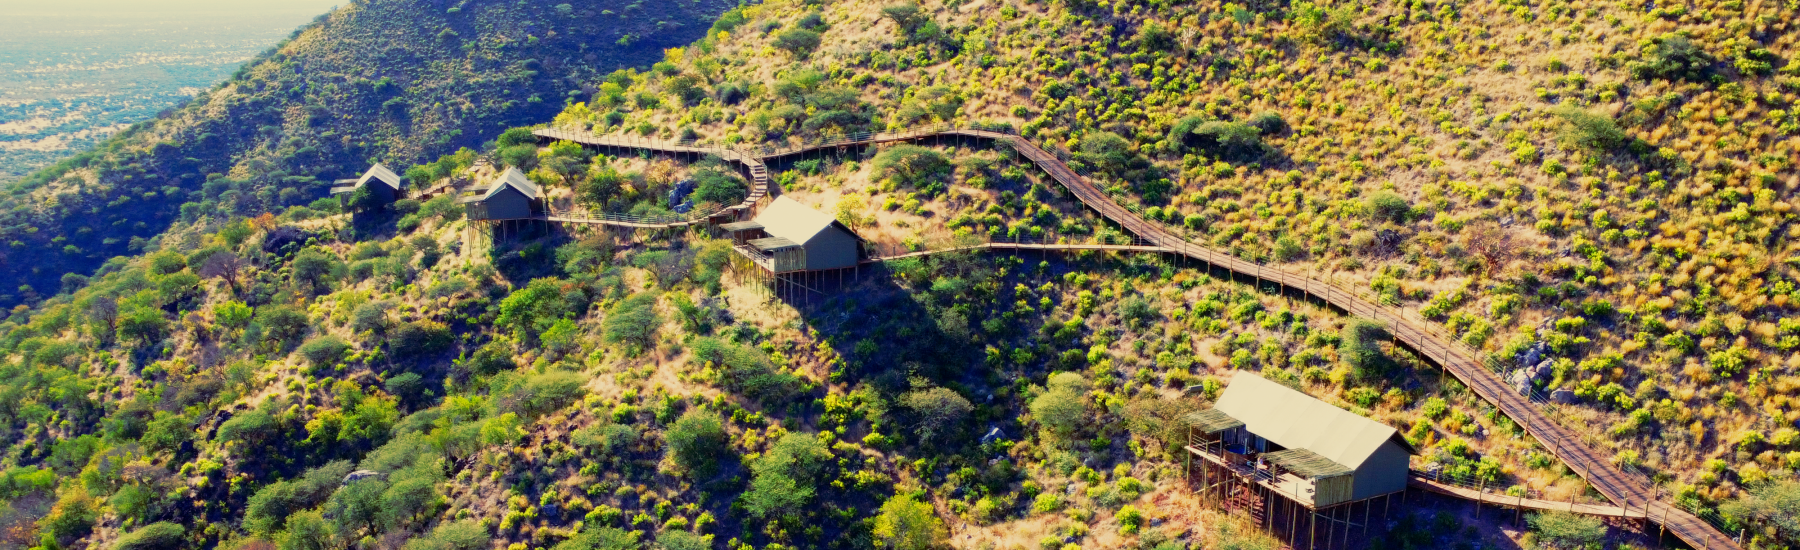 TimBila Safari Lodge